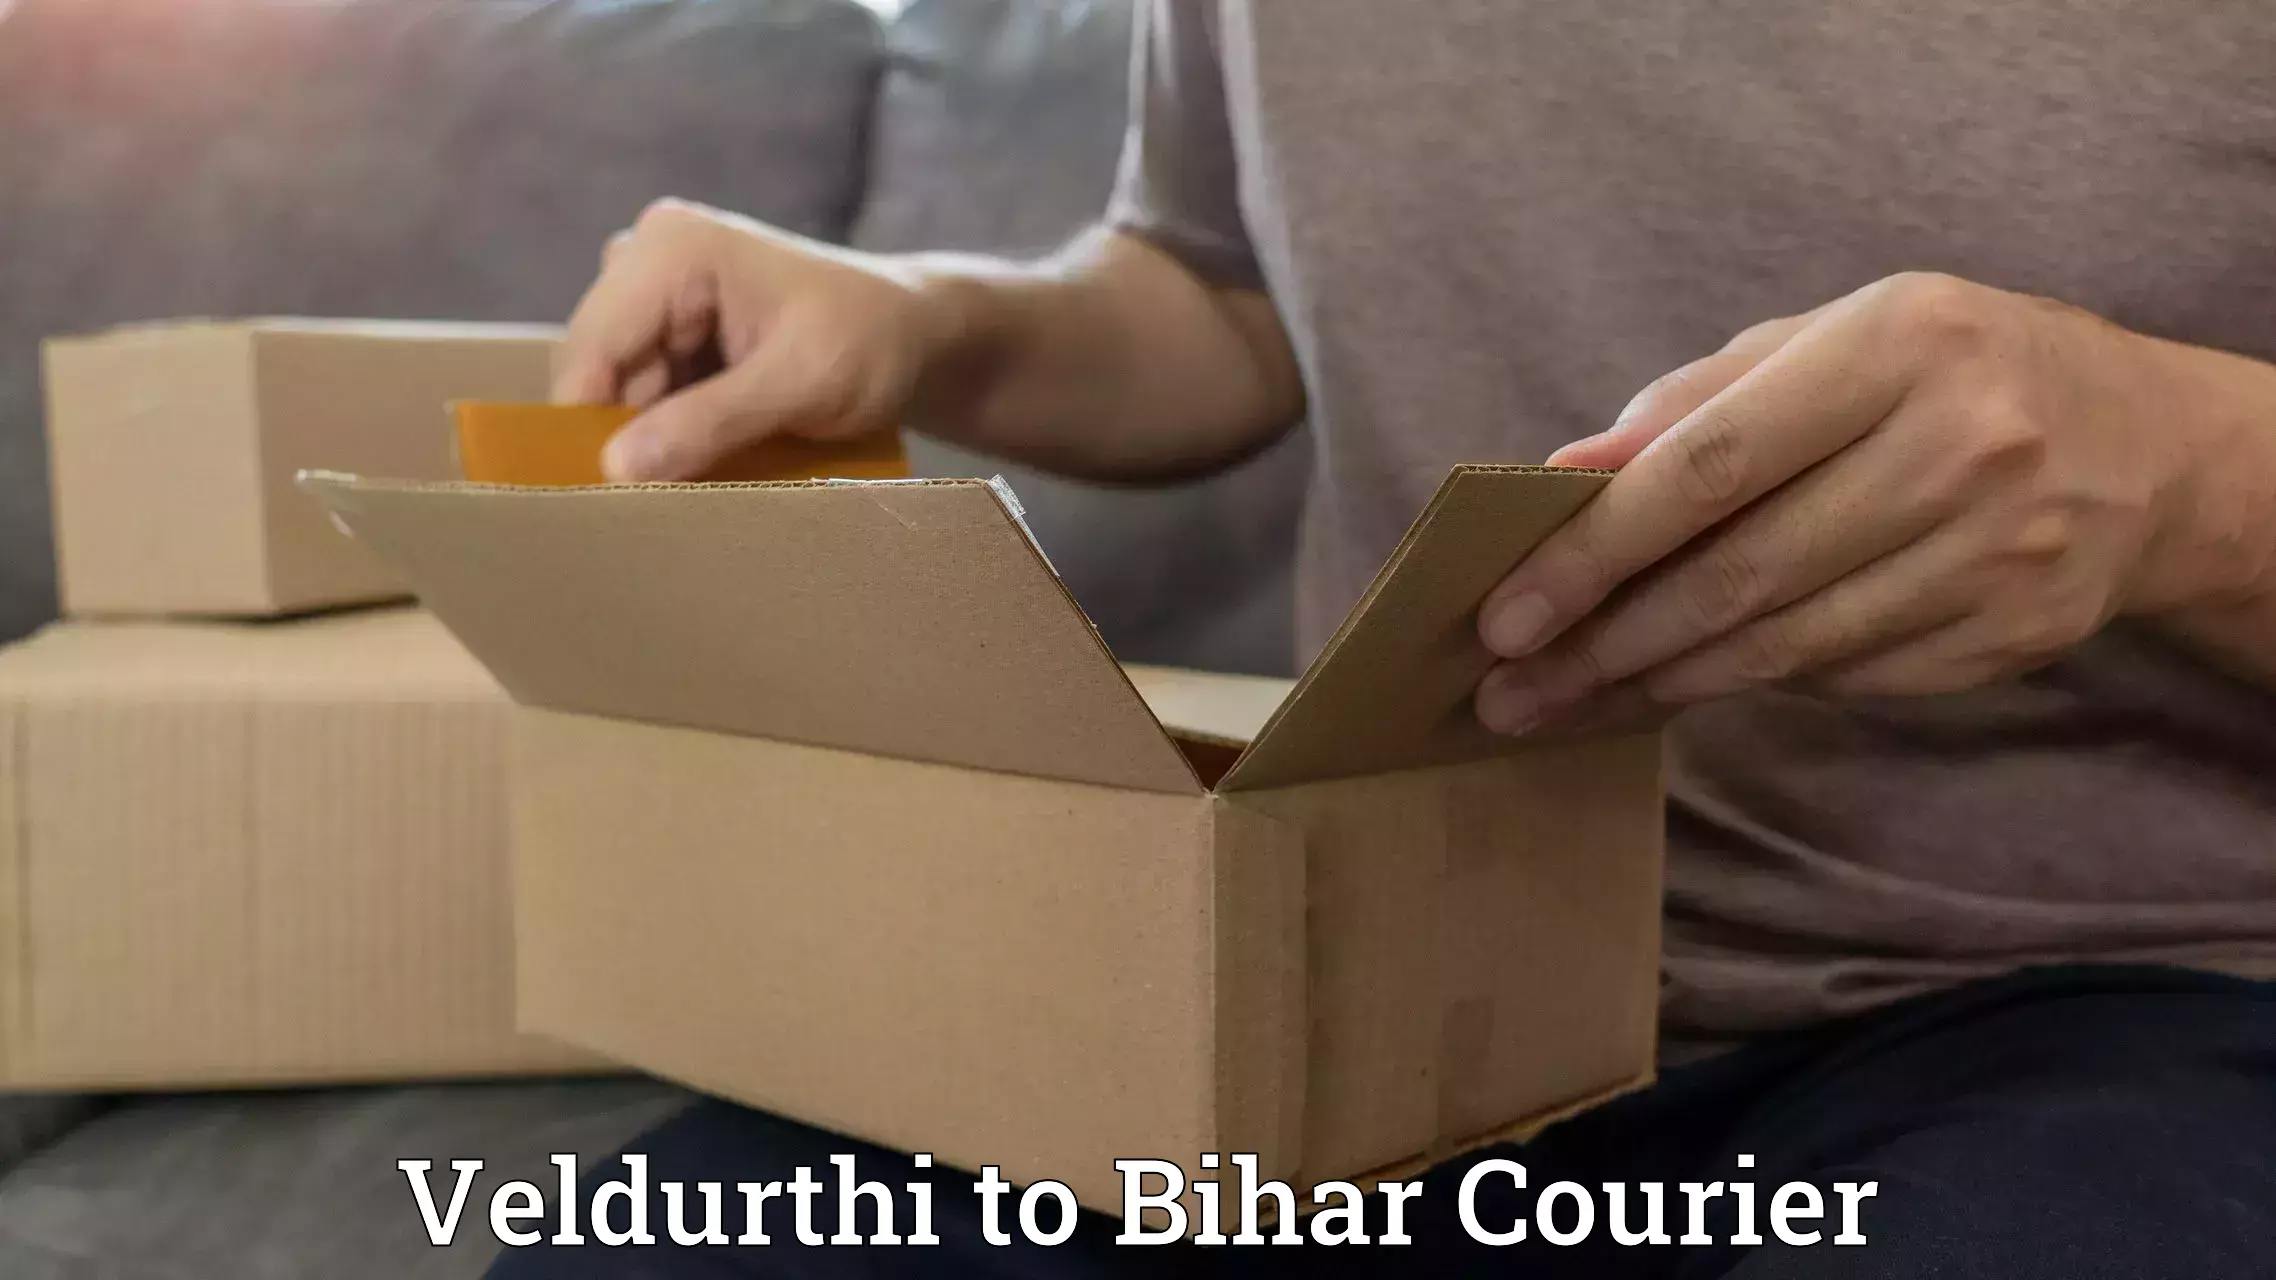 Courier service comparison Veldurthi to Sheohar